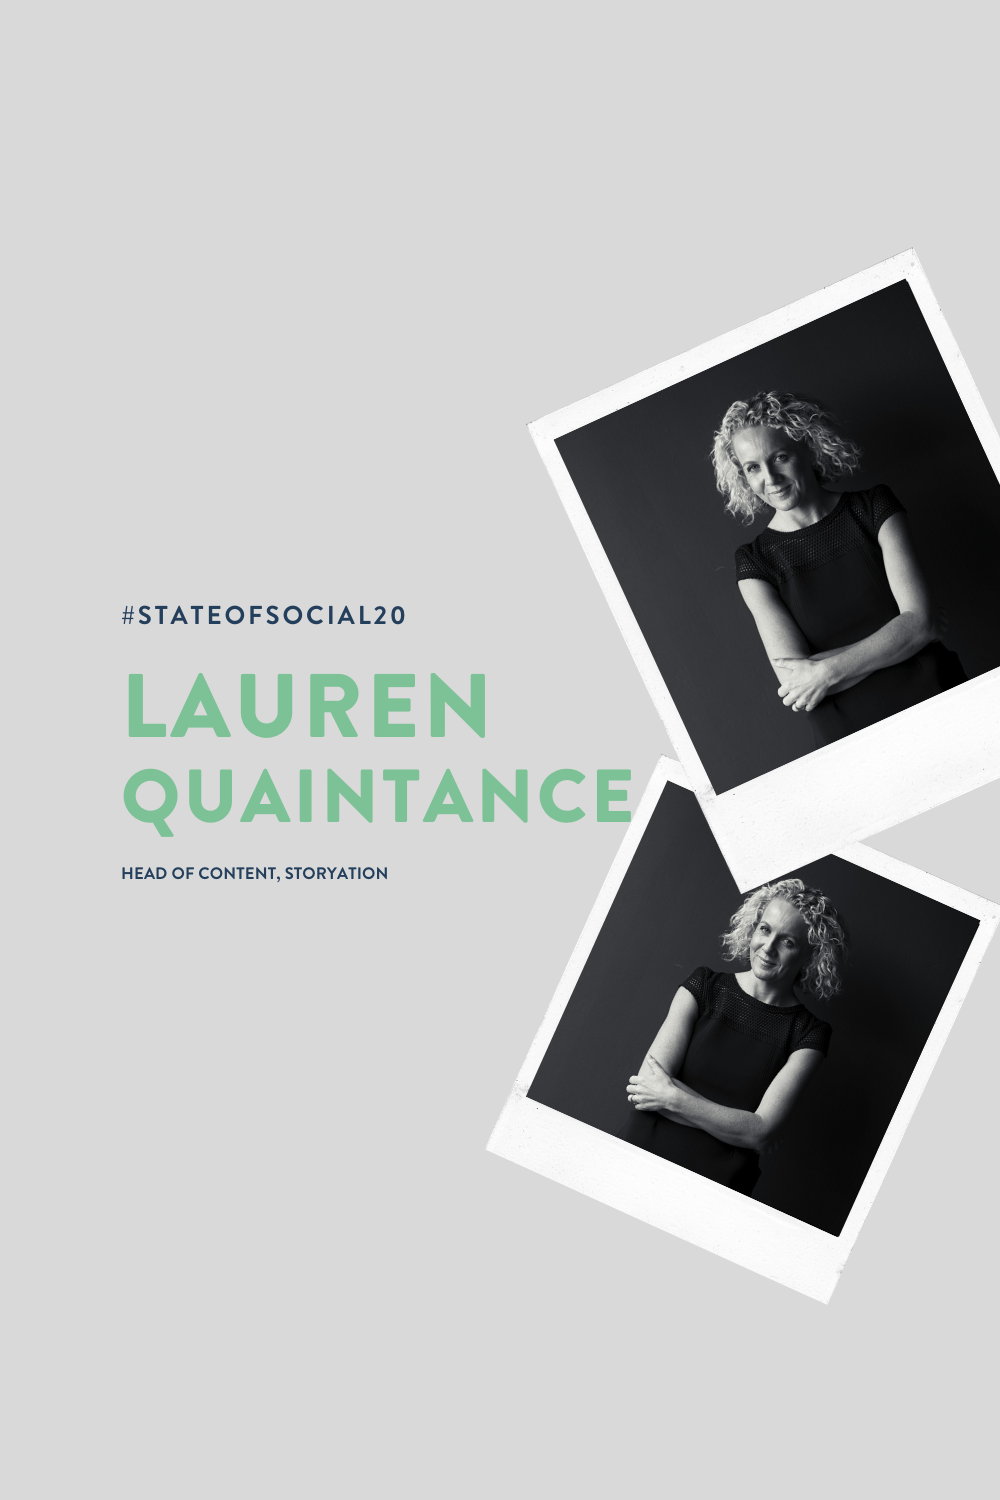 SPEAKER ANNOUNCEMENT: Lauren Quaintance